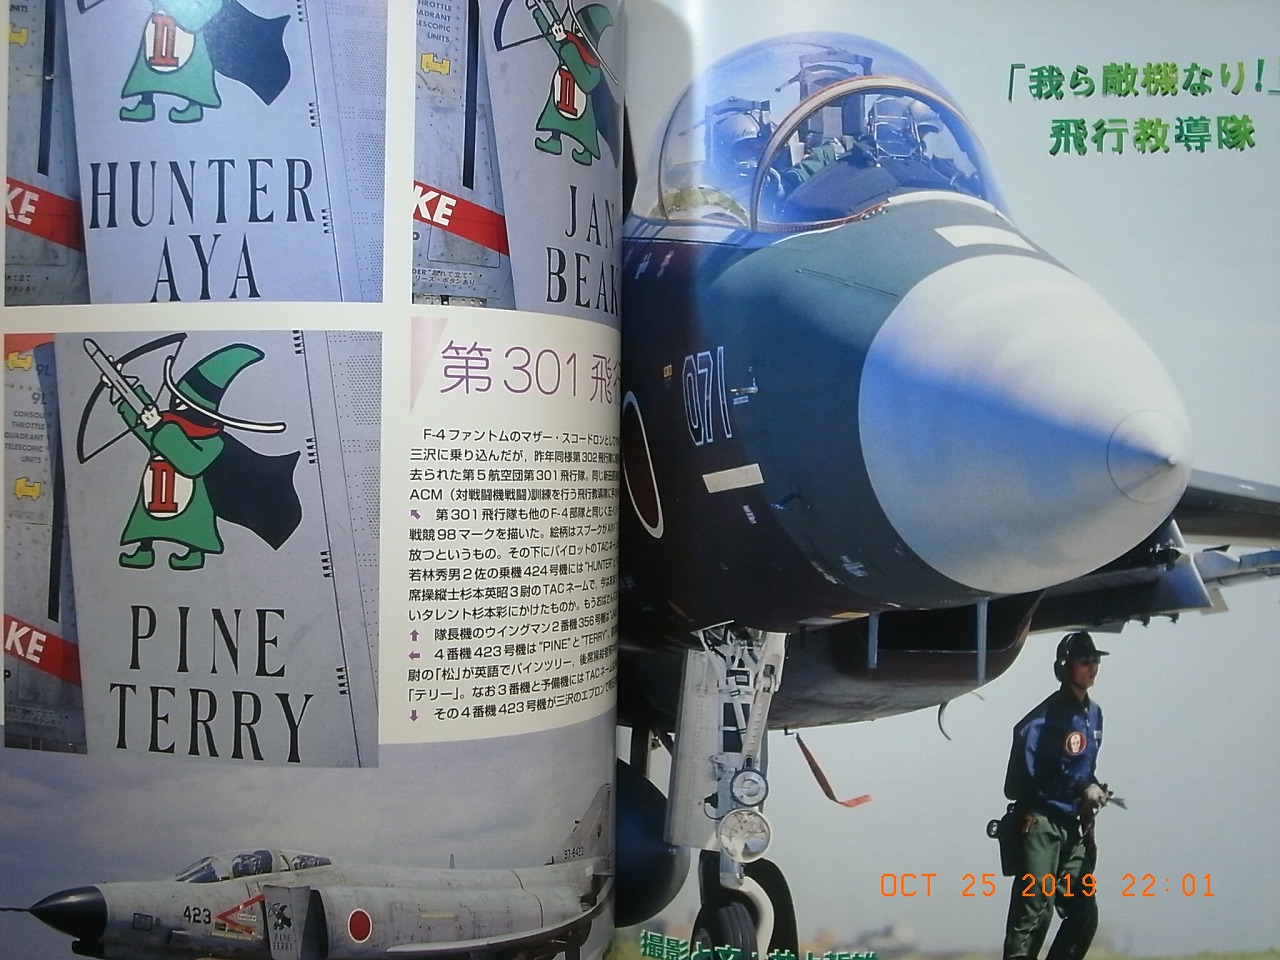 Jasdf Gunnery Meet 1998 Pictorial Book Kantosha Japan Rarebooksjapan Com